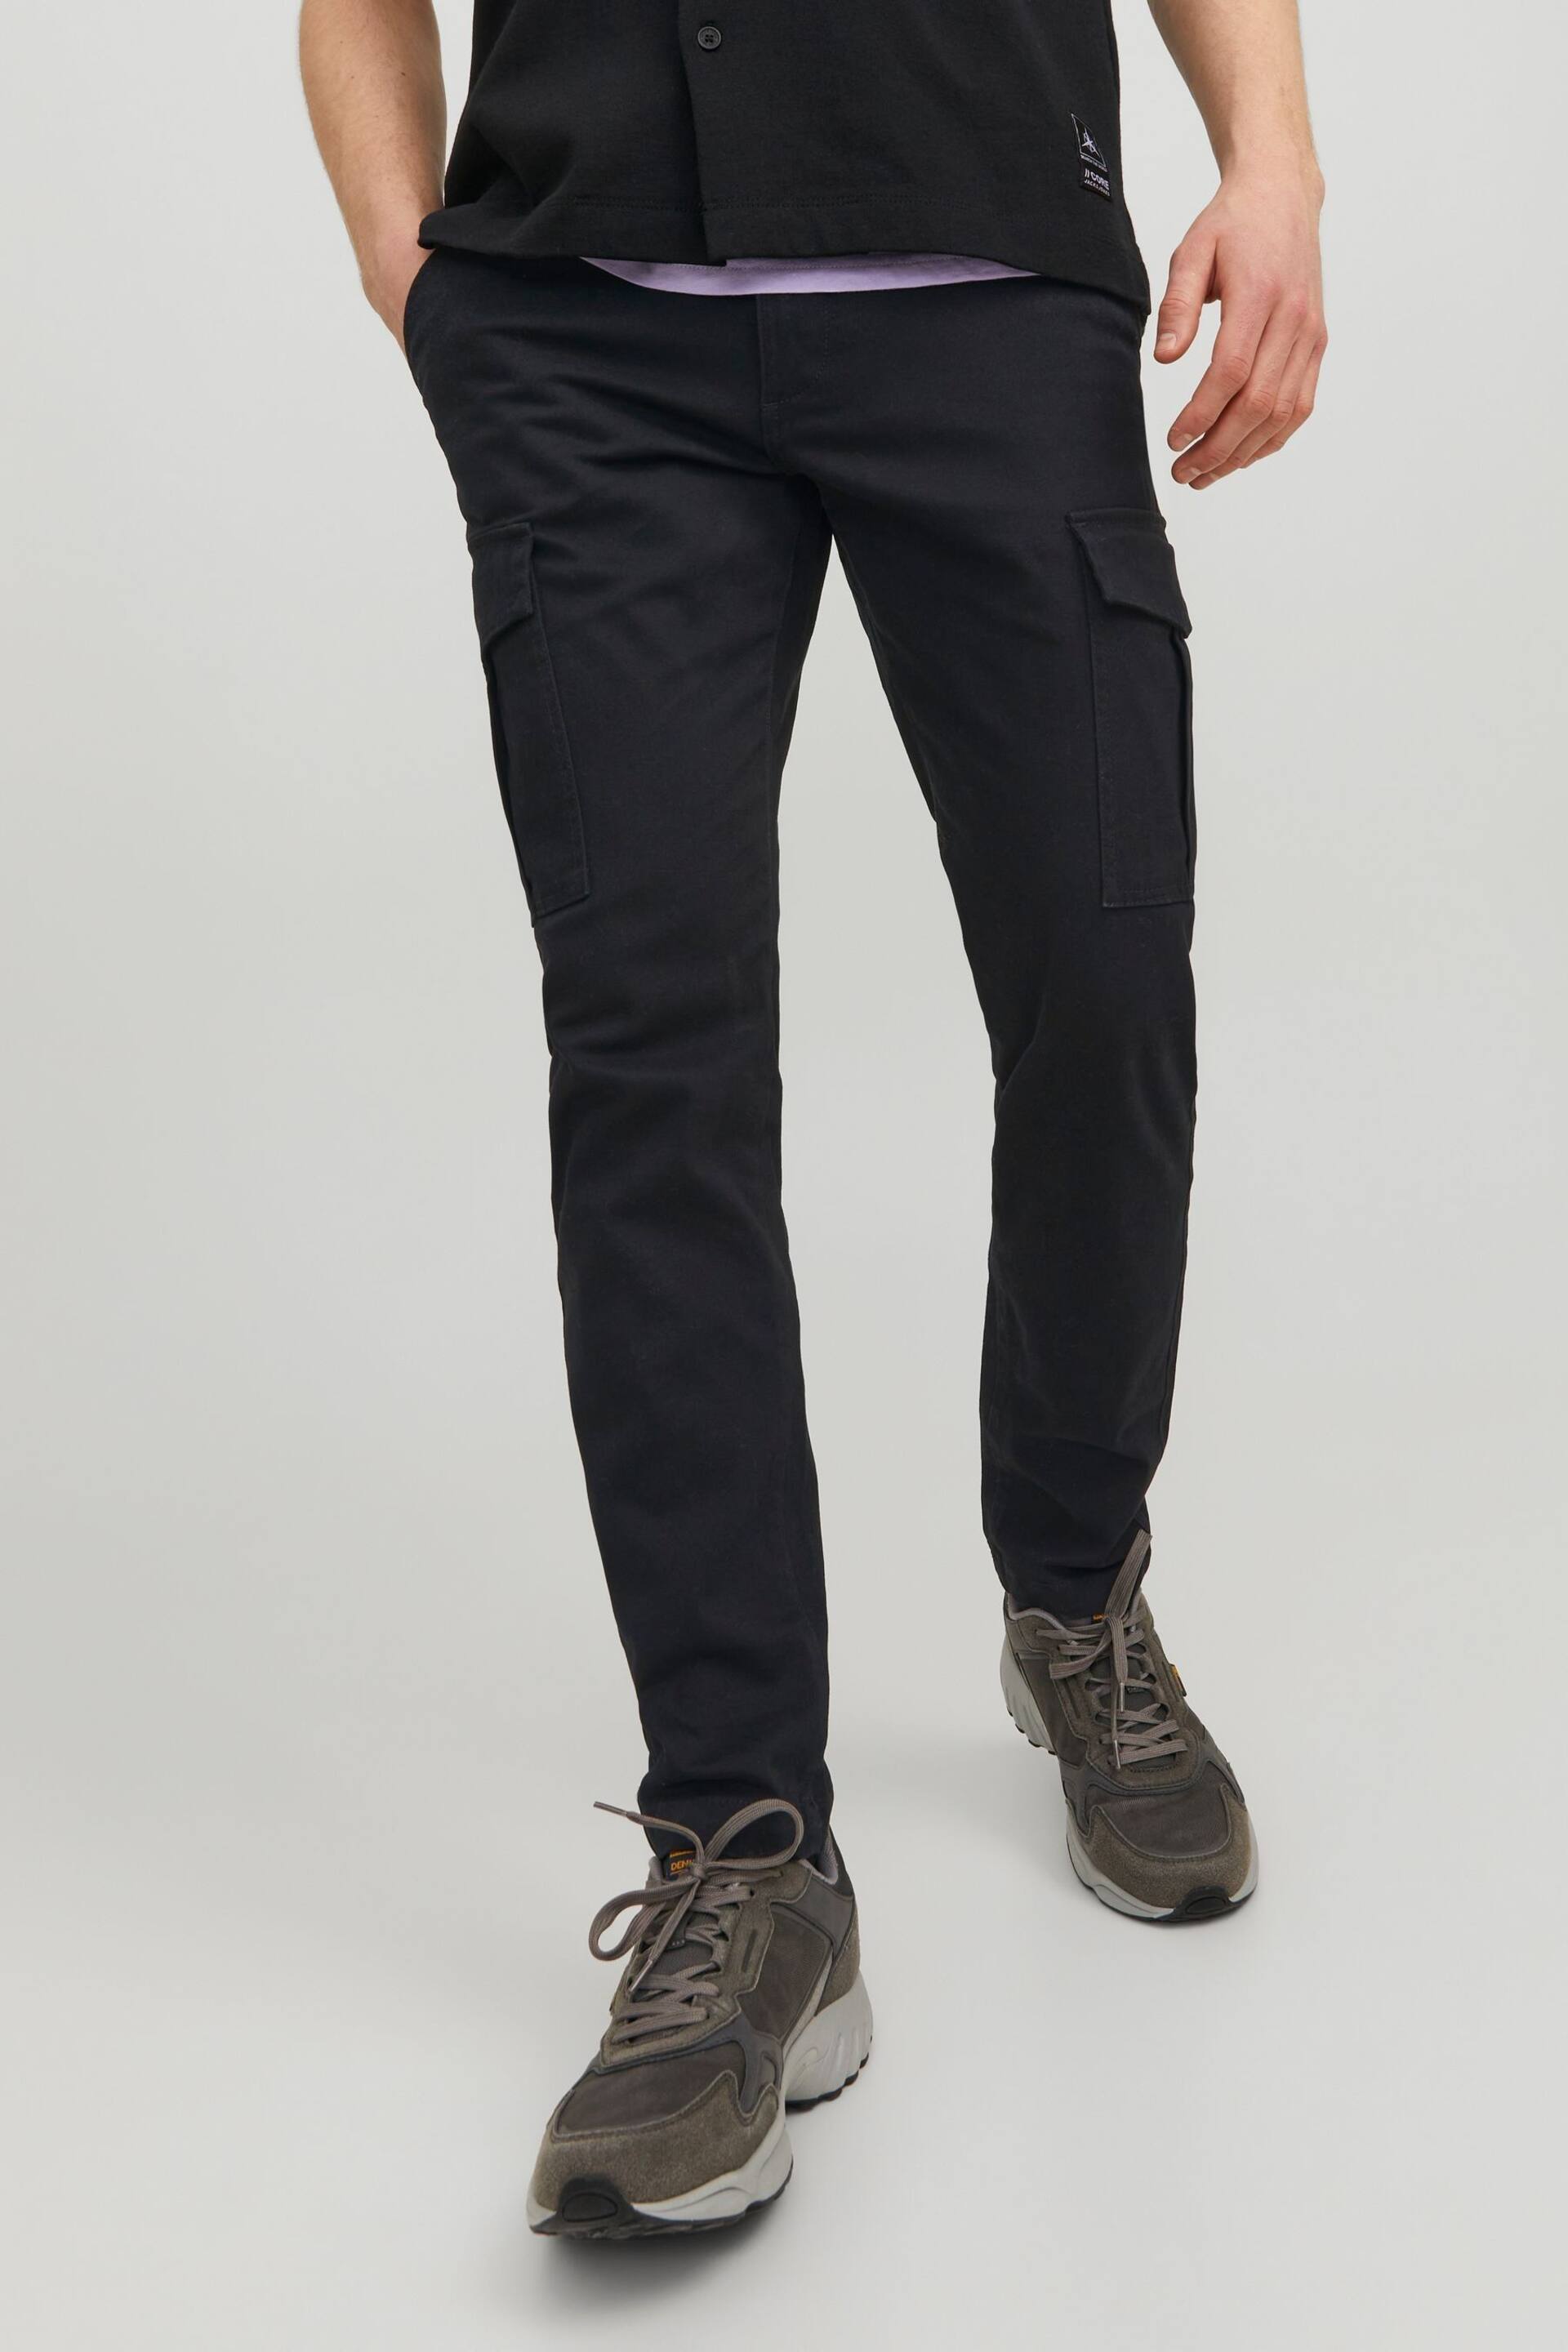 JACK & JONES Black Slim Leg Cuffed Cargo Trousers - Image 1 of 6